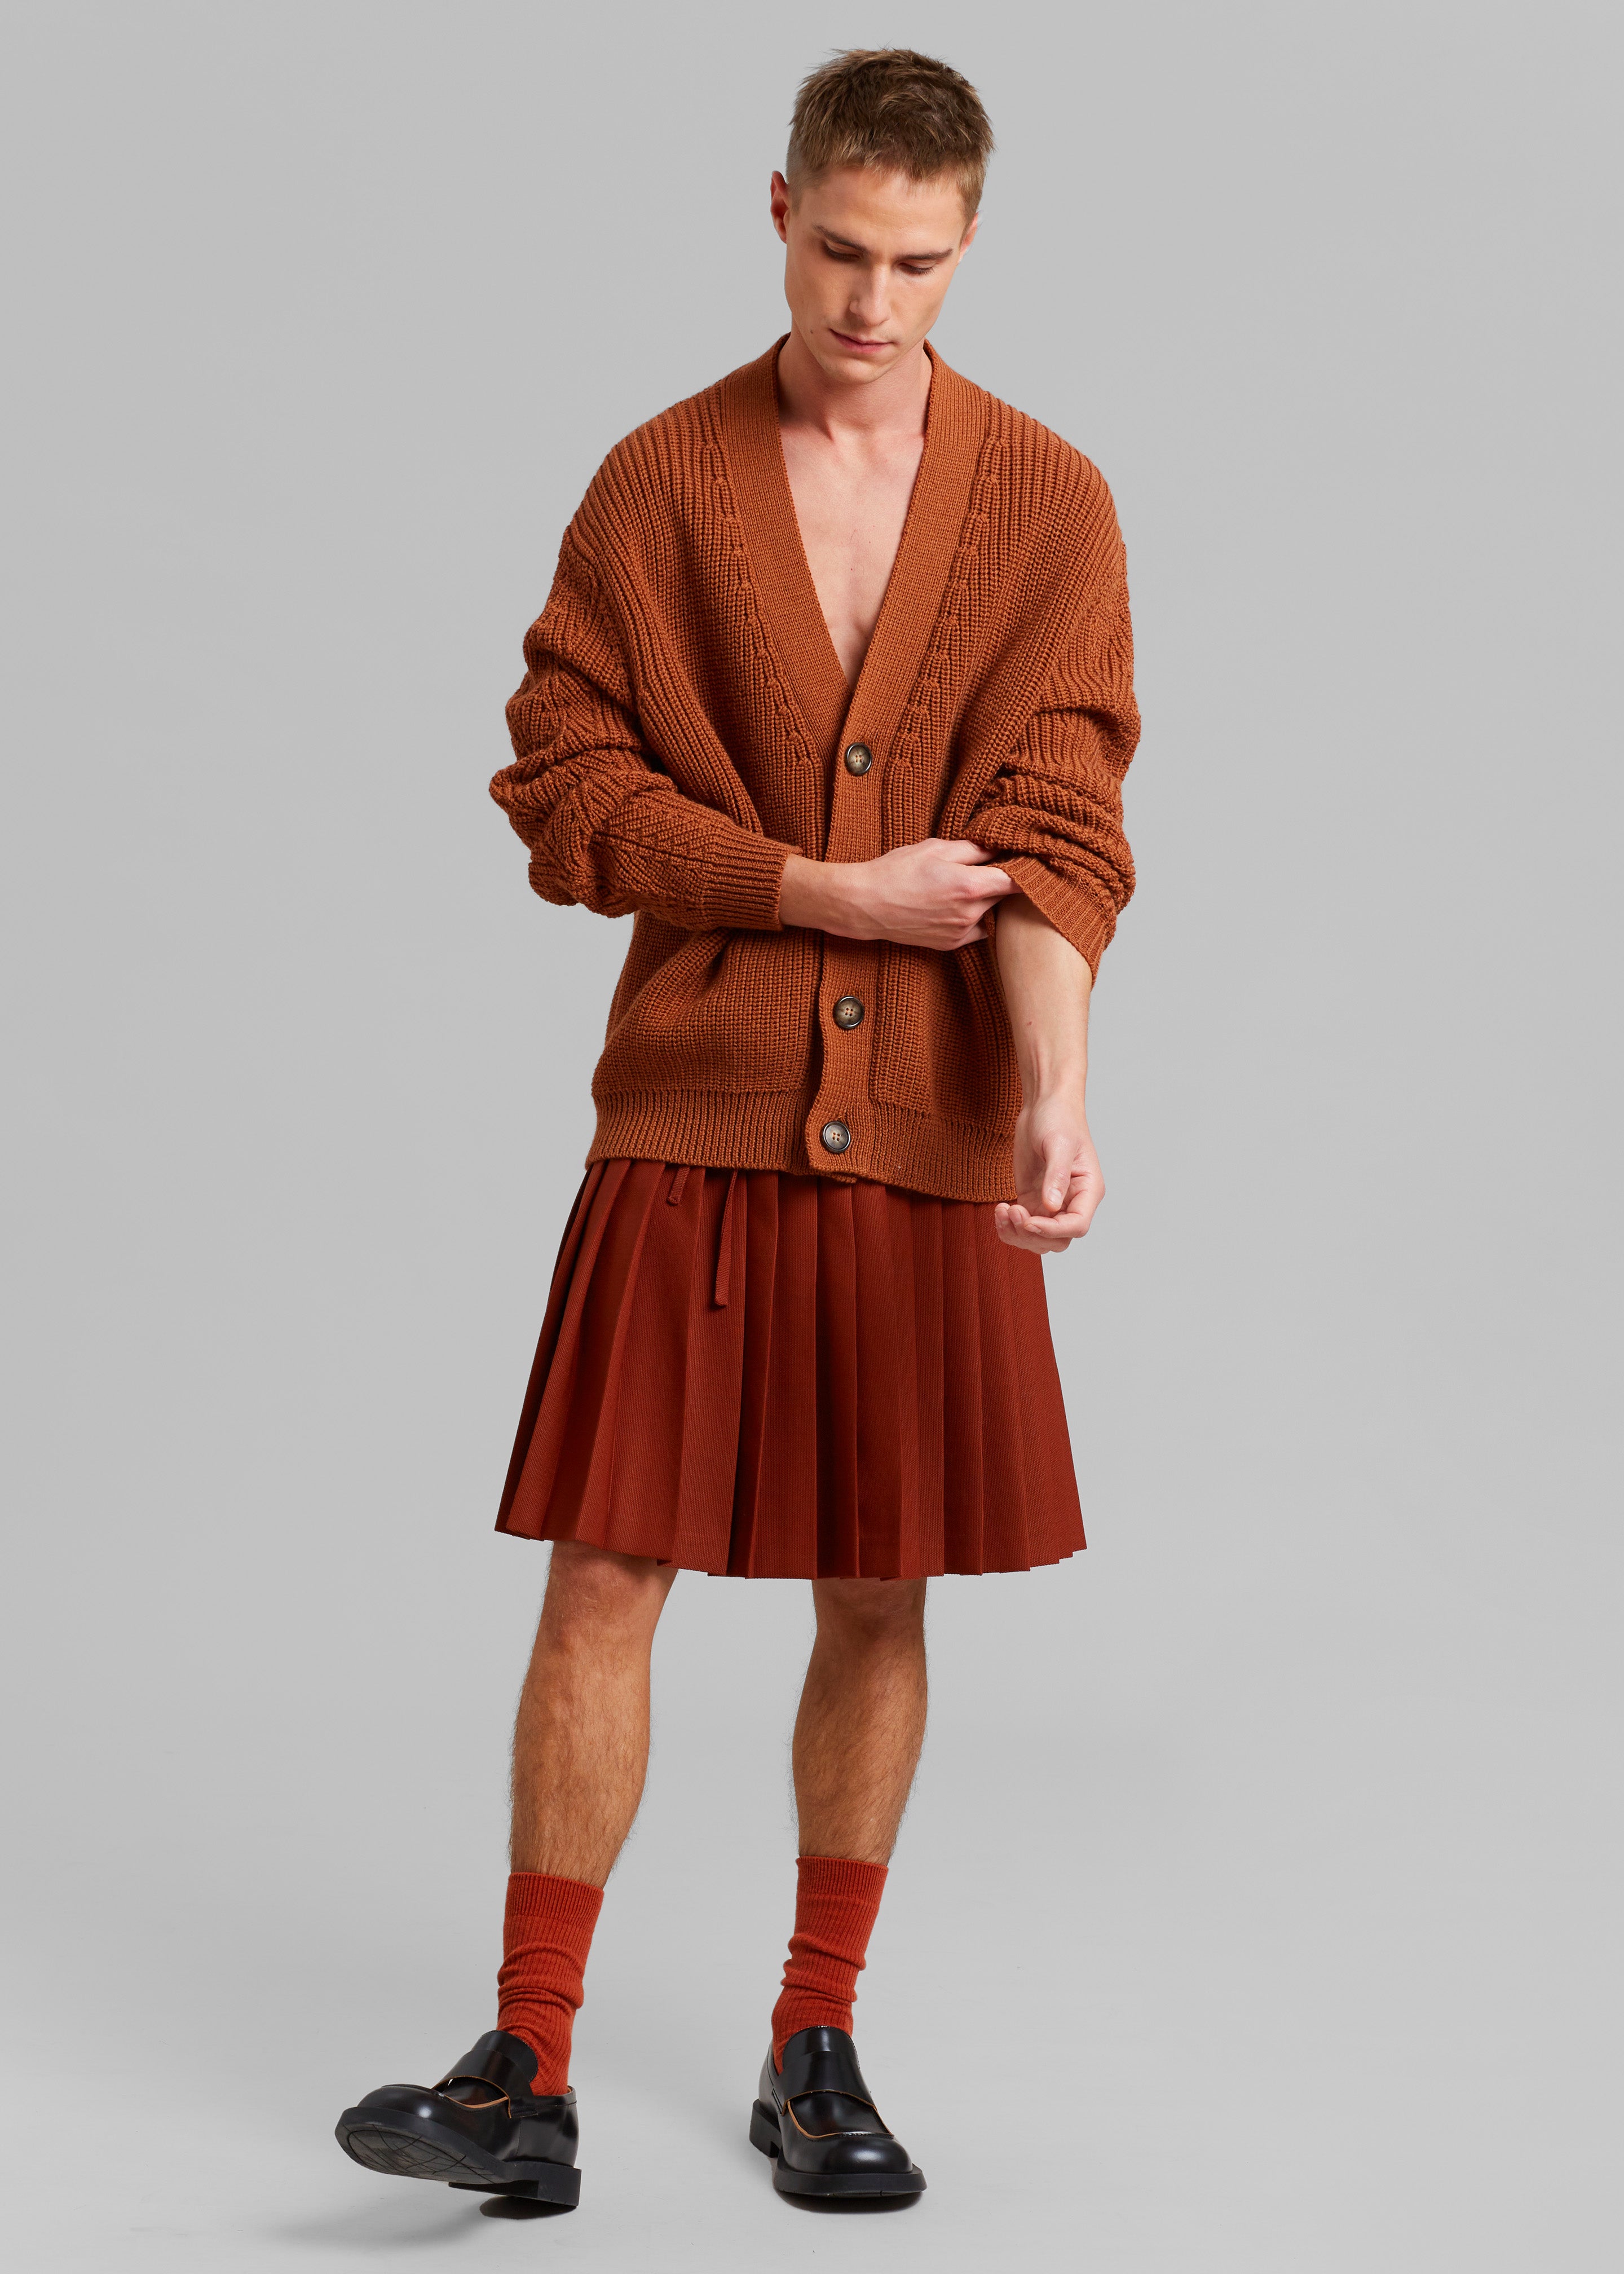 EGONLab Euphoria Skirt - Rust Wool - 1